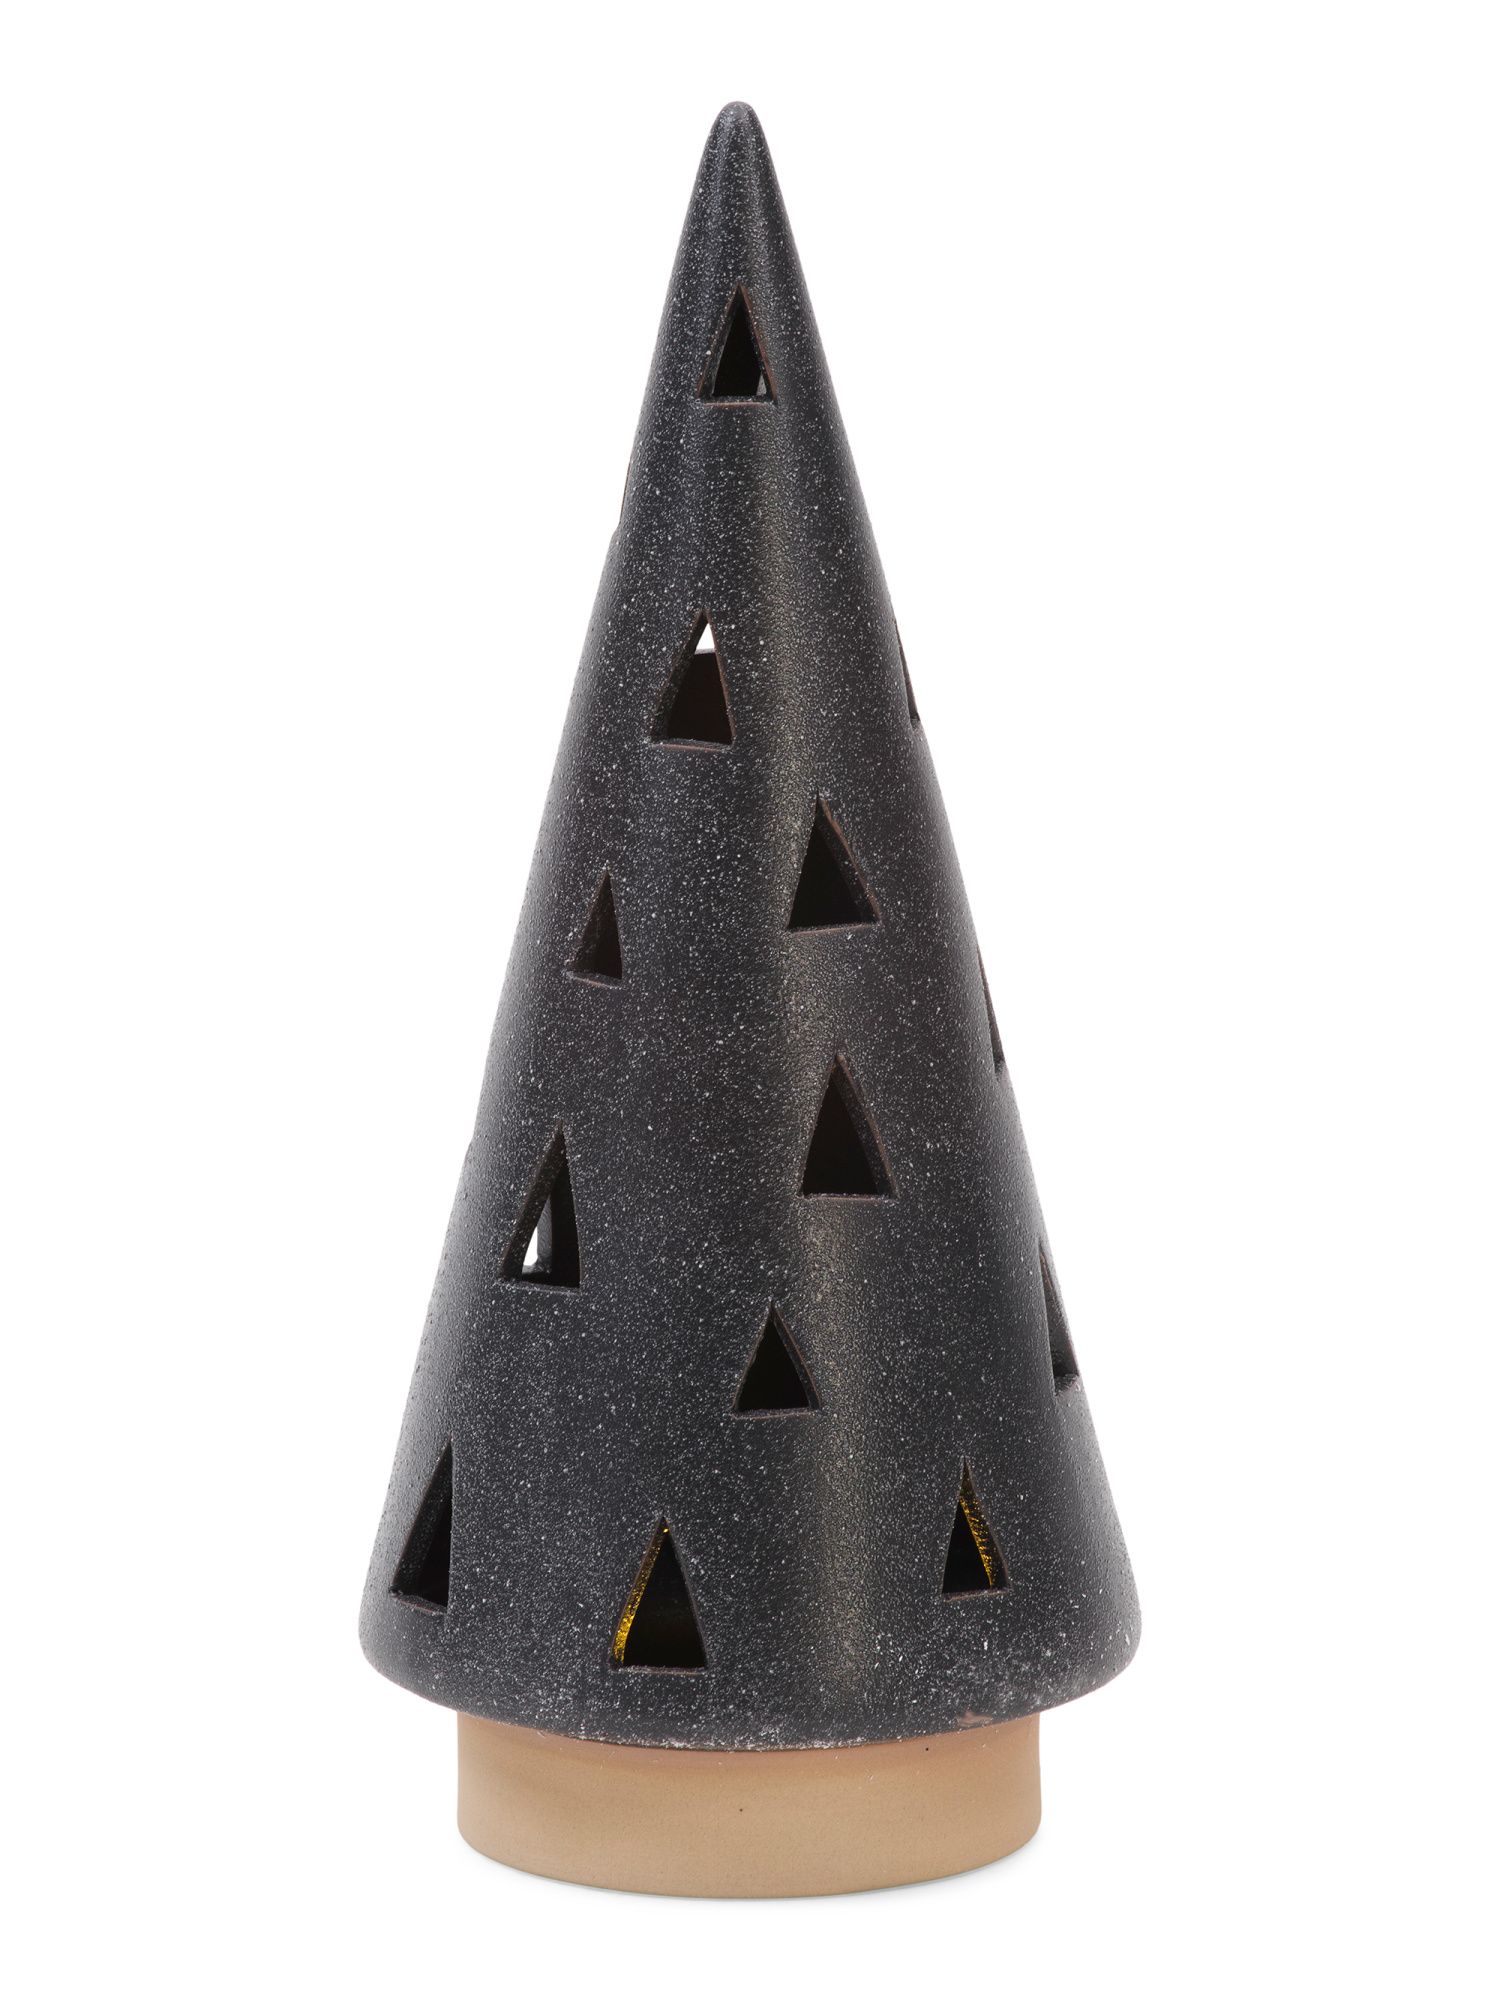 11in Ceramic Christmas Decorative Tree With Led | TJ Maxx